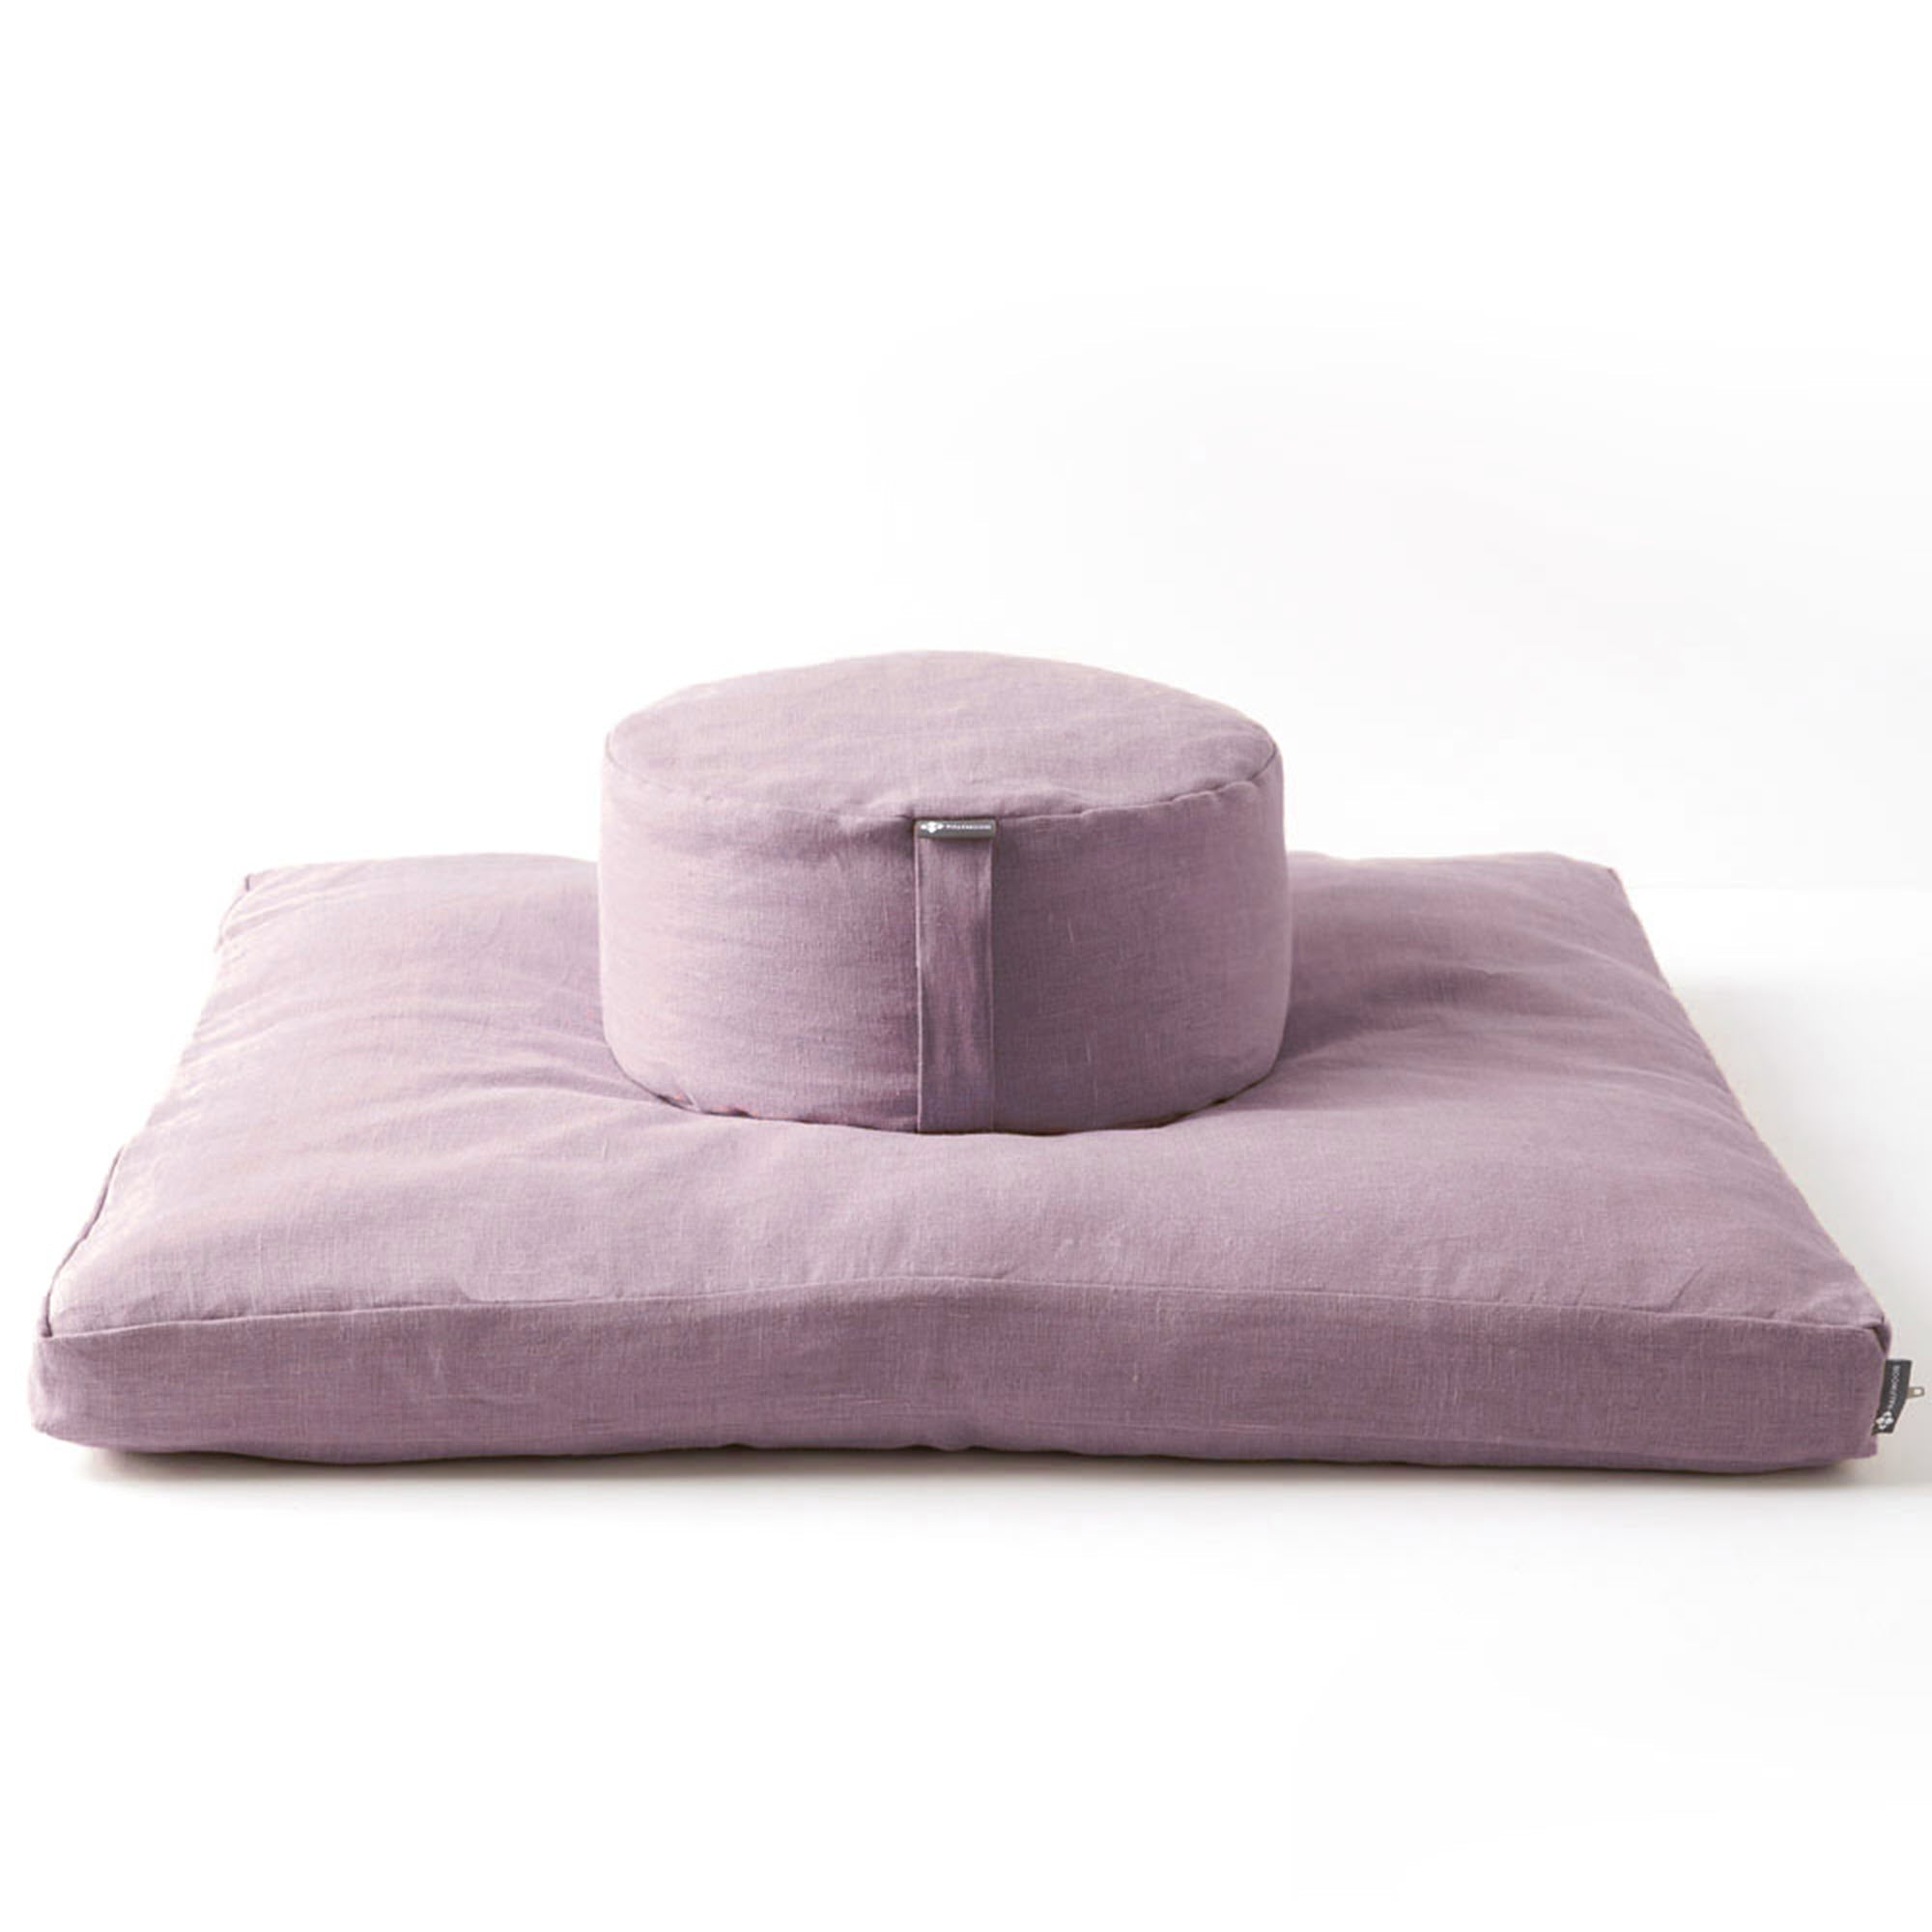 b, halfmoon Linen Mod Meditation Cushion